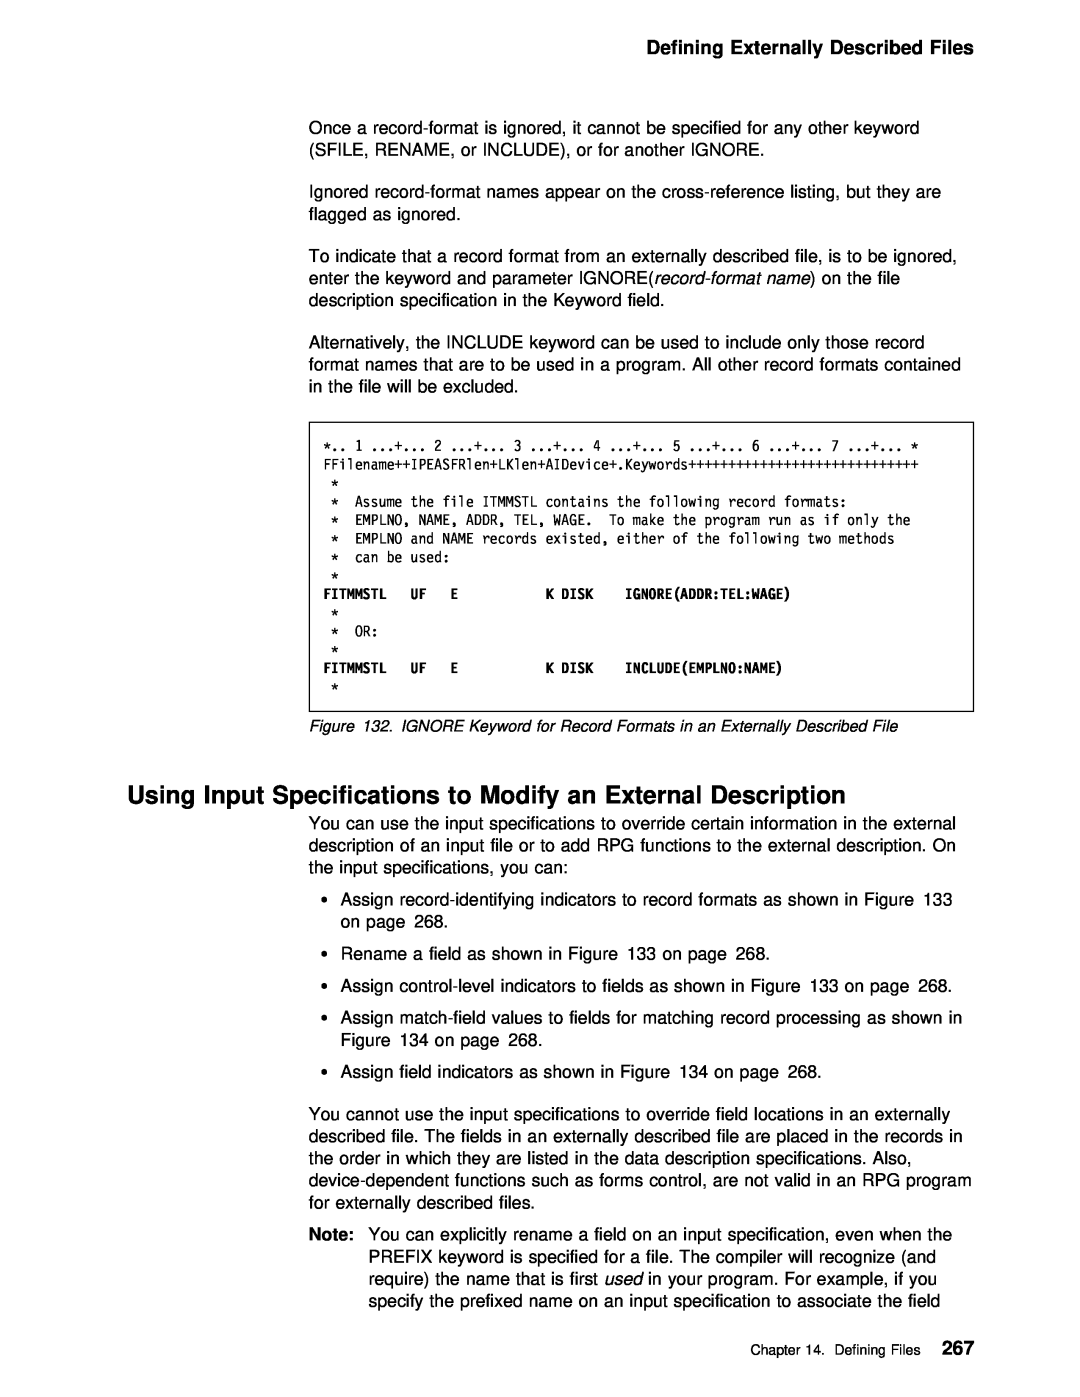 IBM AS/400 manual Modify an, Description, Using Input Specifications, Defining Externally Described Files 